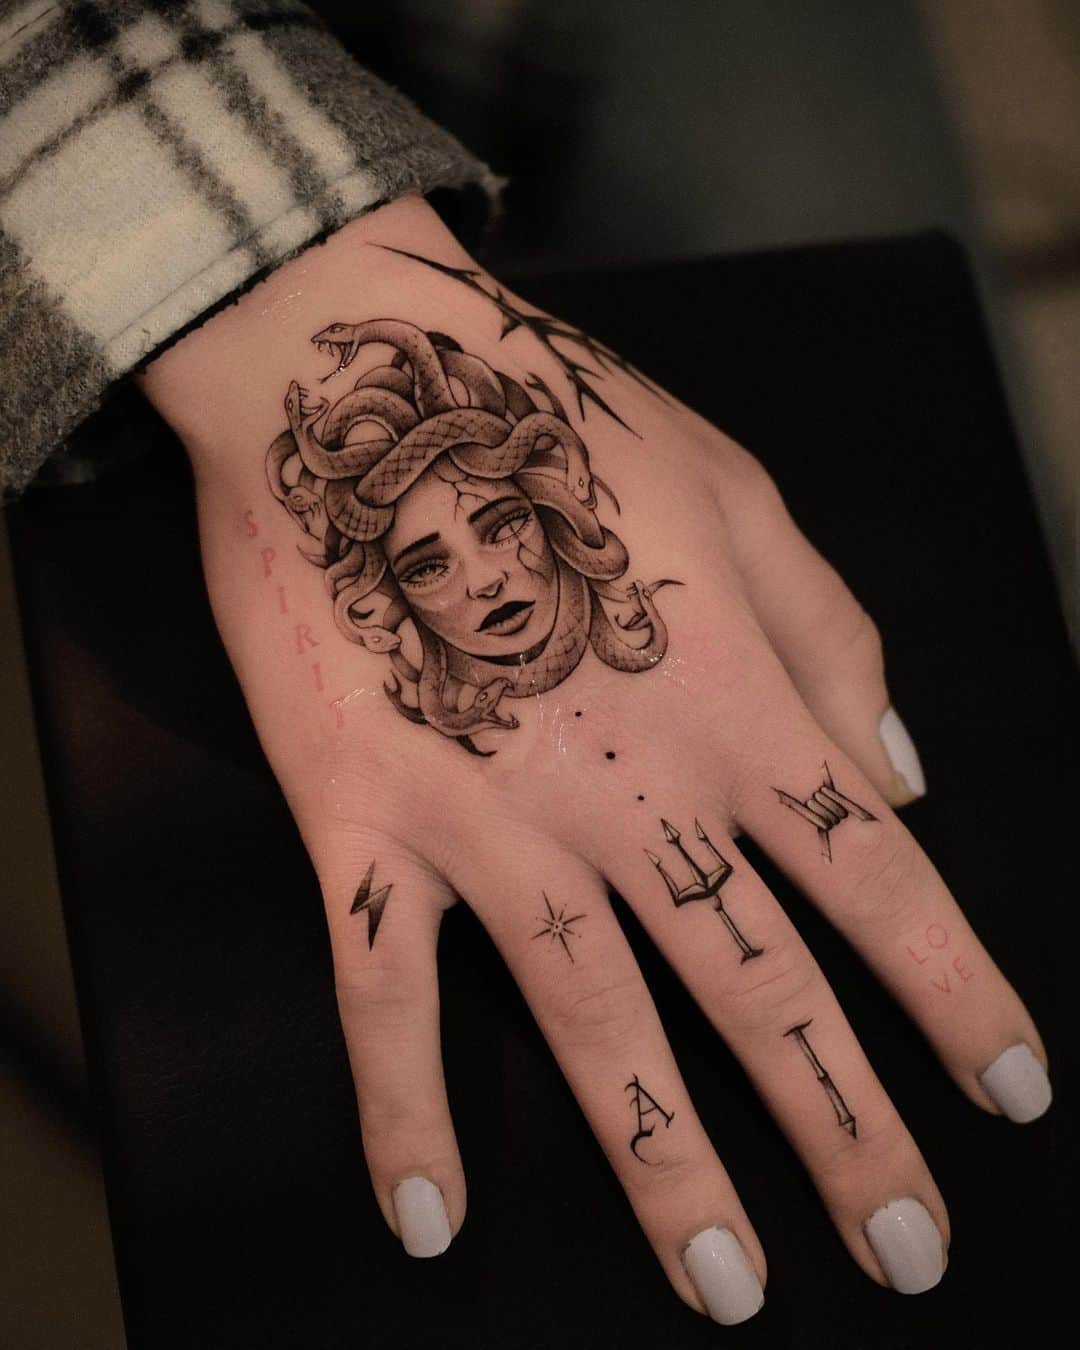 Medusa tattoo on hand by 21reyno